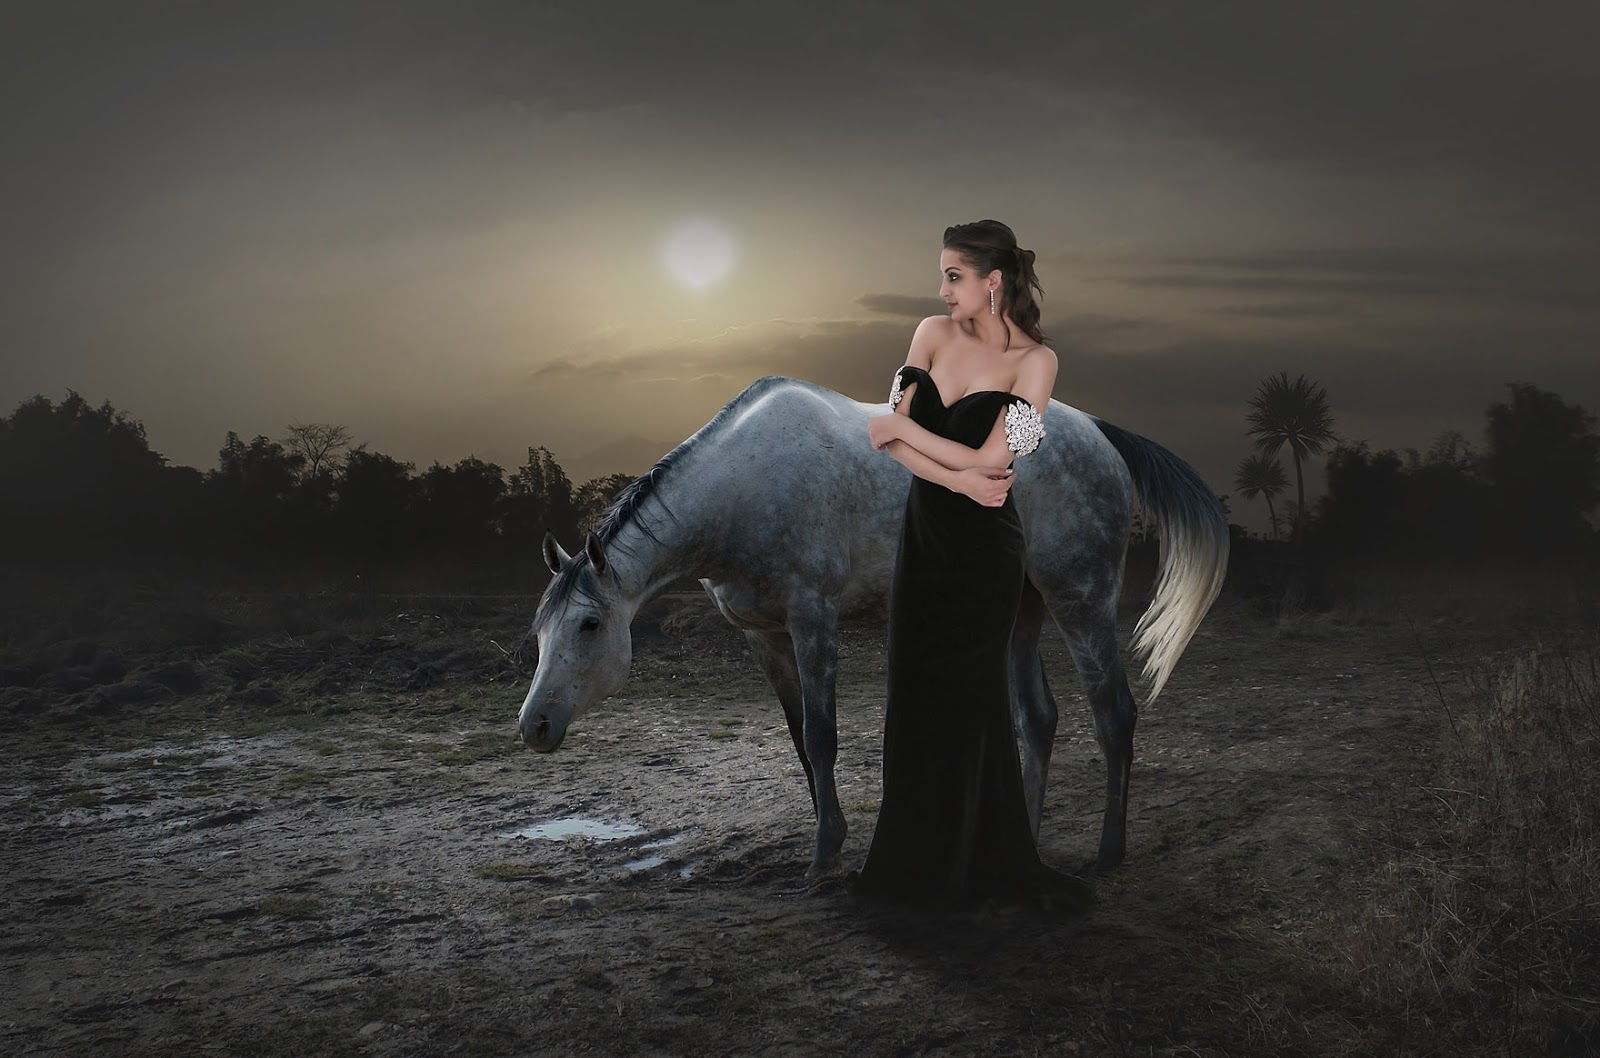 Девушка с лошадью видео. Женщина на лошади. Женщина с лицом лошади. Картина женщина на лошади.